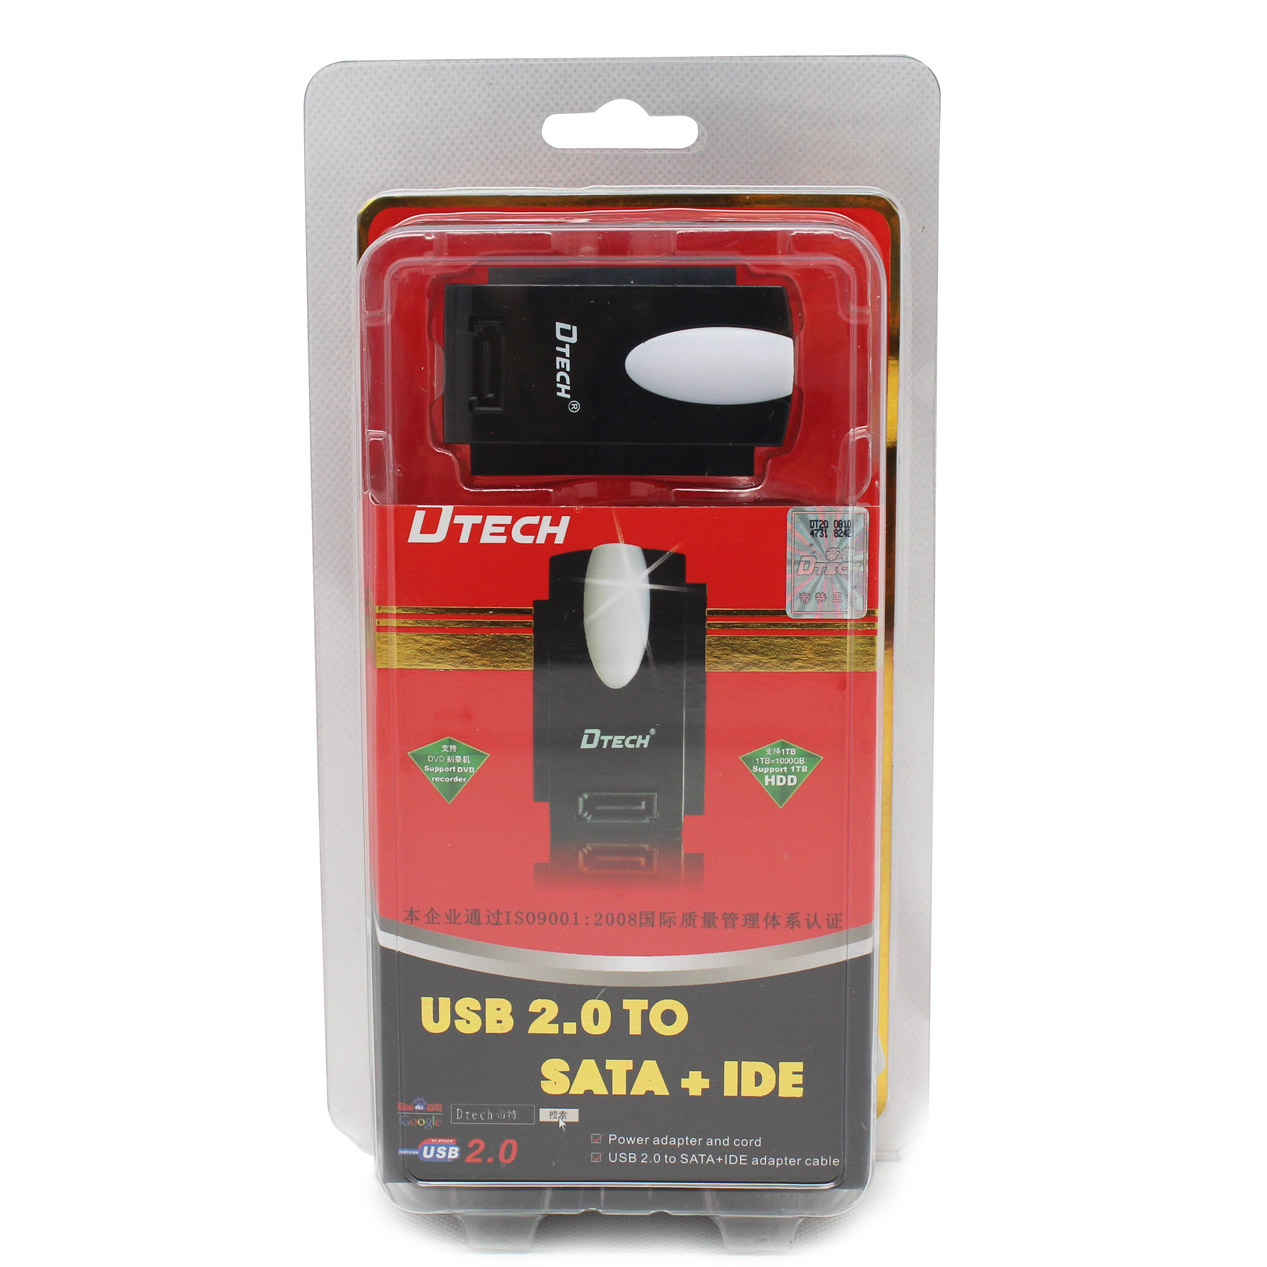 Bộ Cáp chuyển đổi USB 2.0 sang Sata IDE Dtech DT8003A